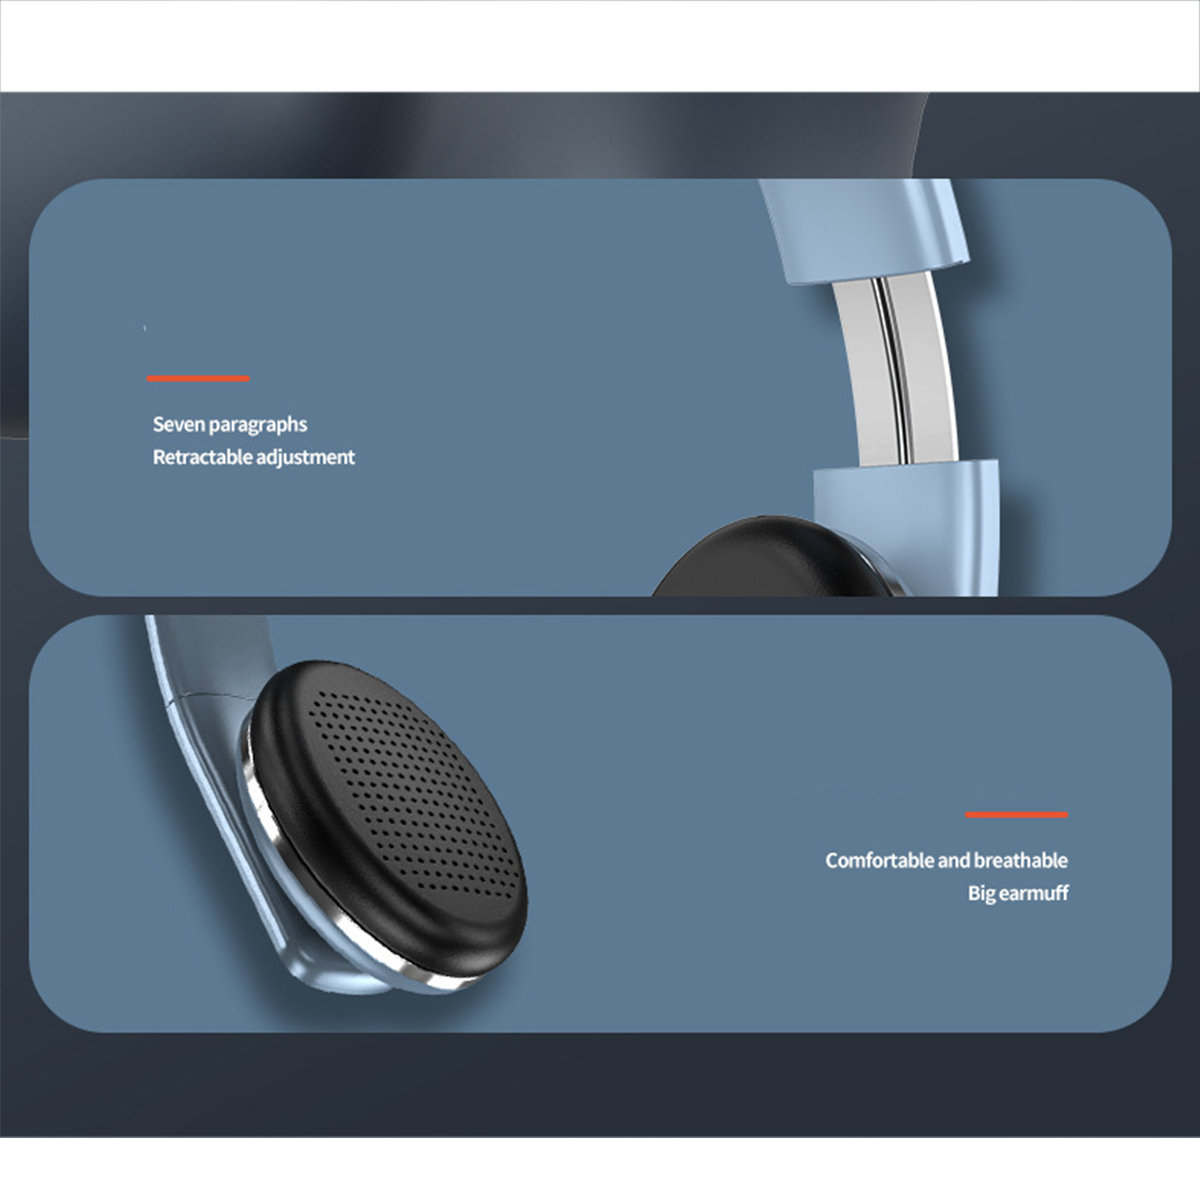 & Hochwertiger Klang, Blau 5.0, Lange Drahtloses Over-ear Akkulaufzeit Bluetooth Kopfhörer Gaming-Headset: BRIGHTAKE